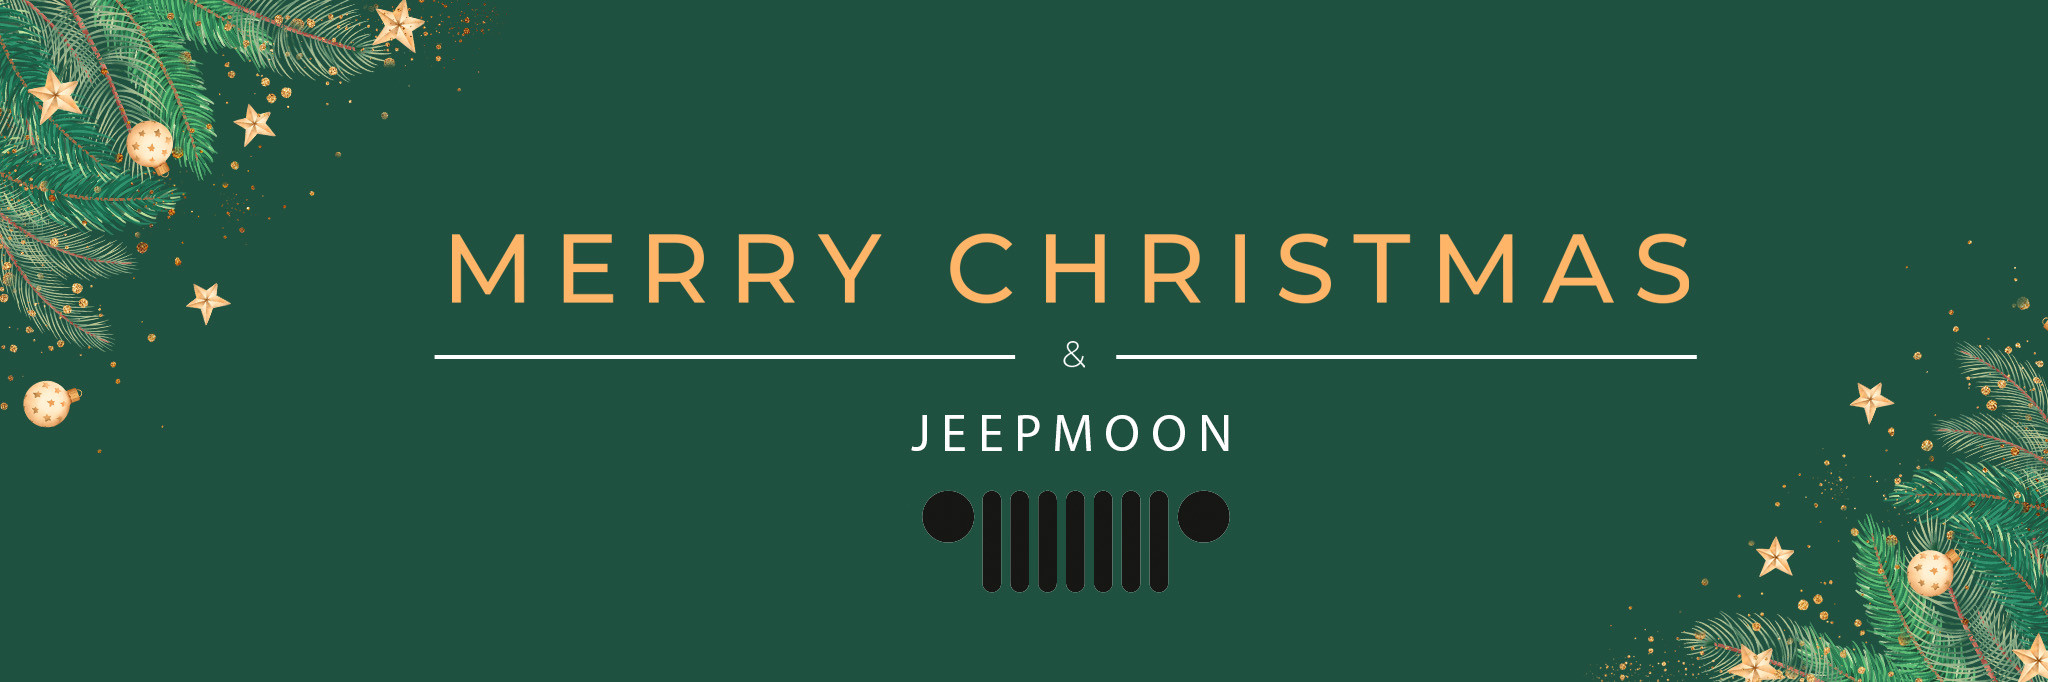 Christmas JeepMoon